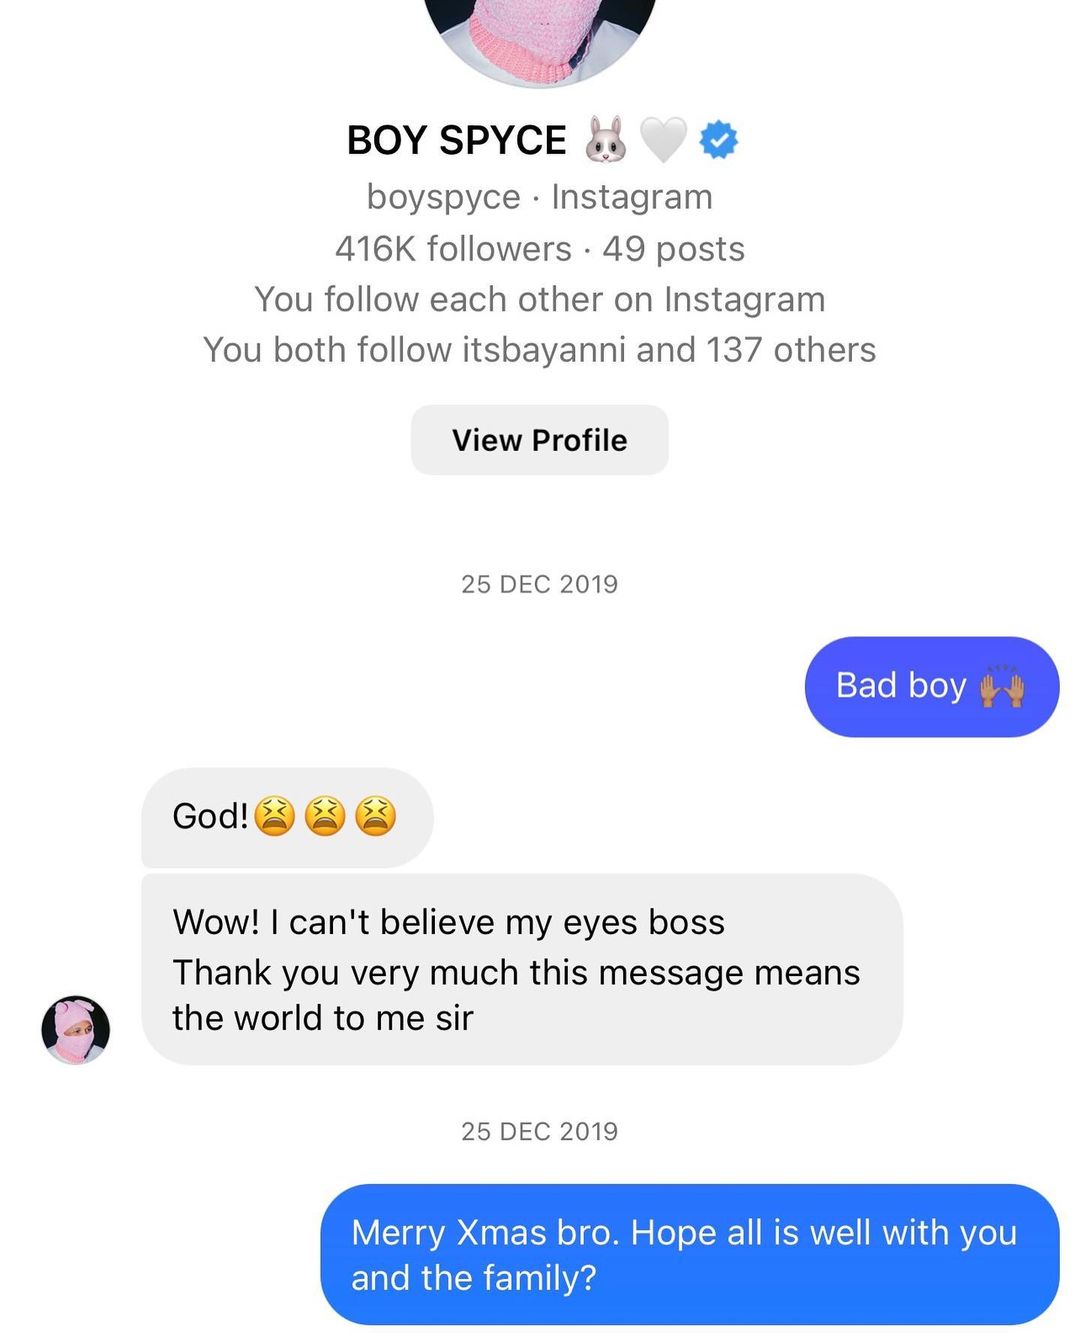 Don jazzy's chat on Instagram with Boyspyce 